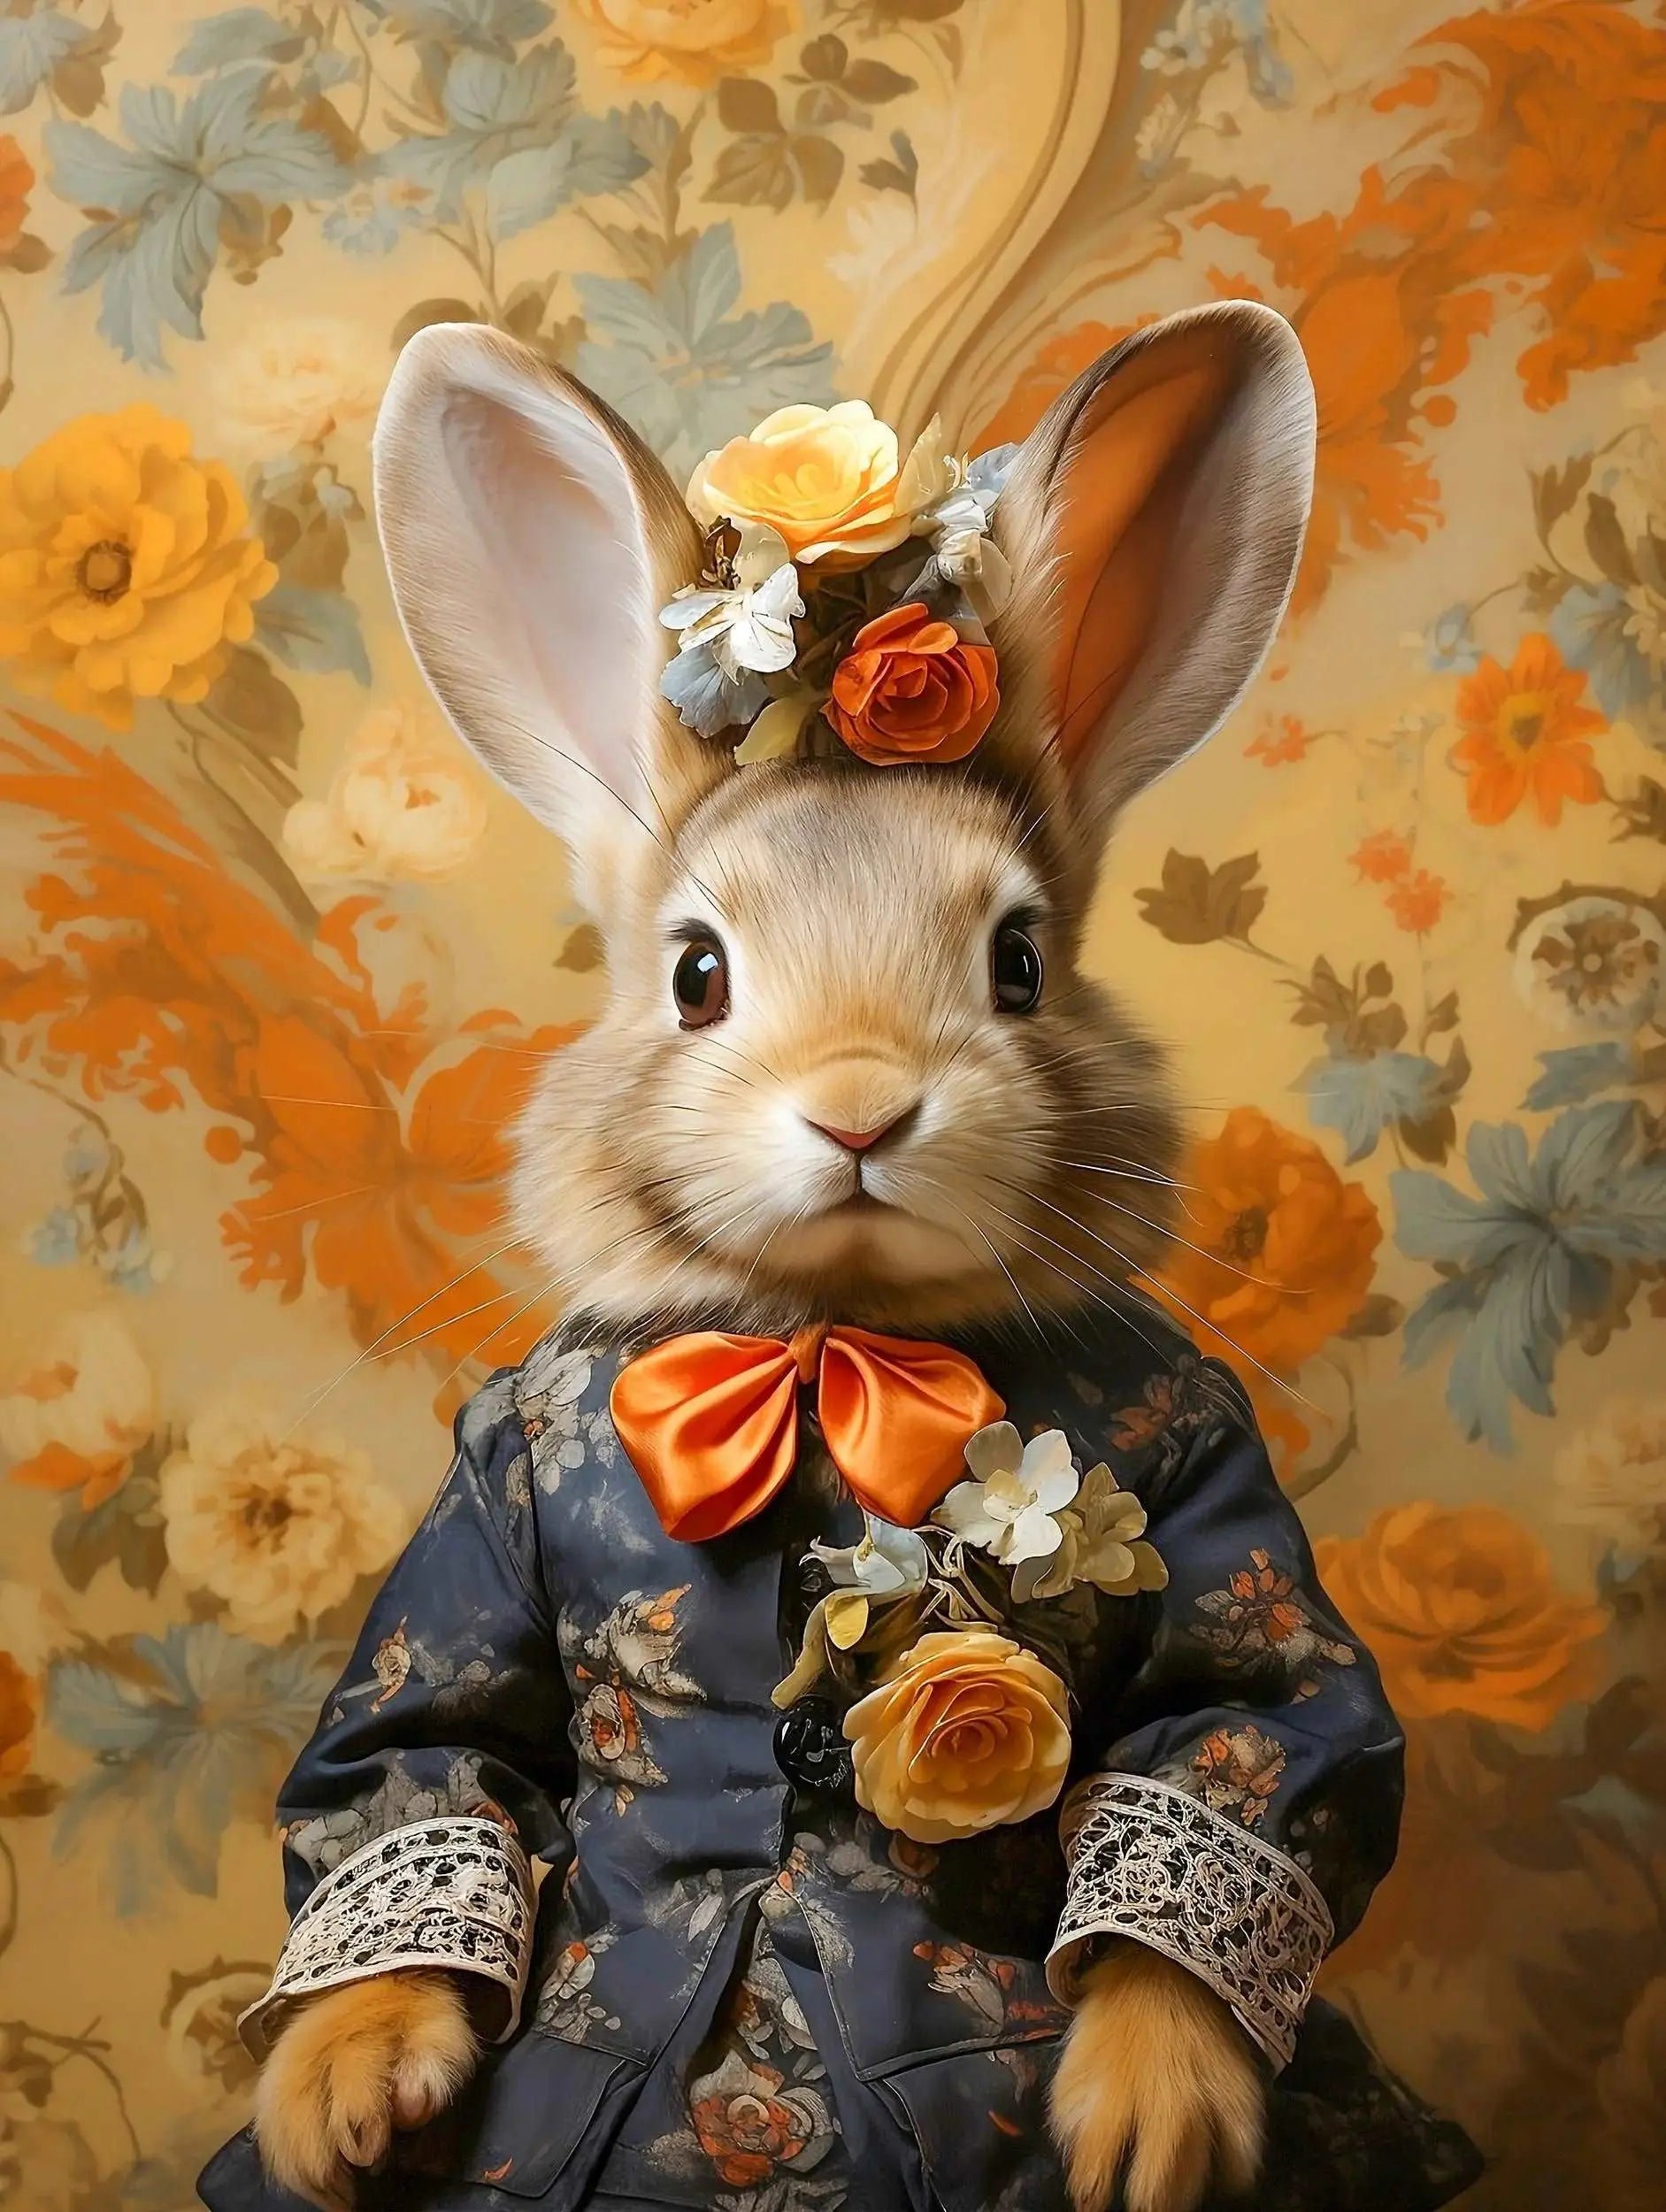 vintage rabbit costume